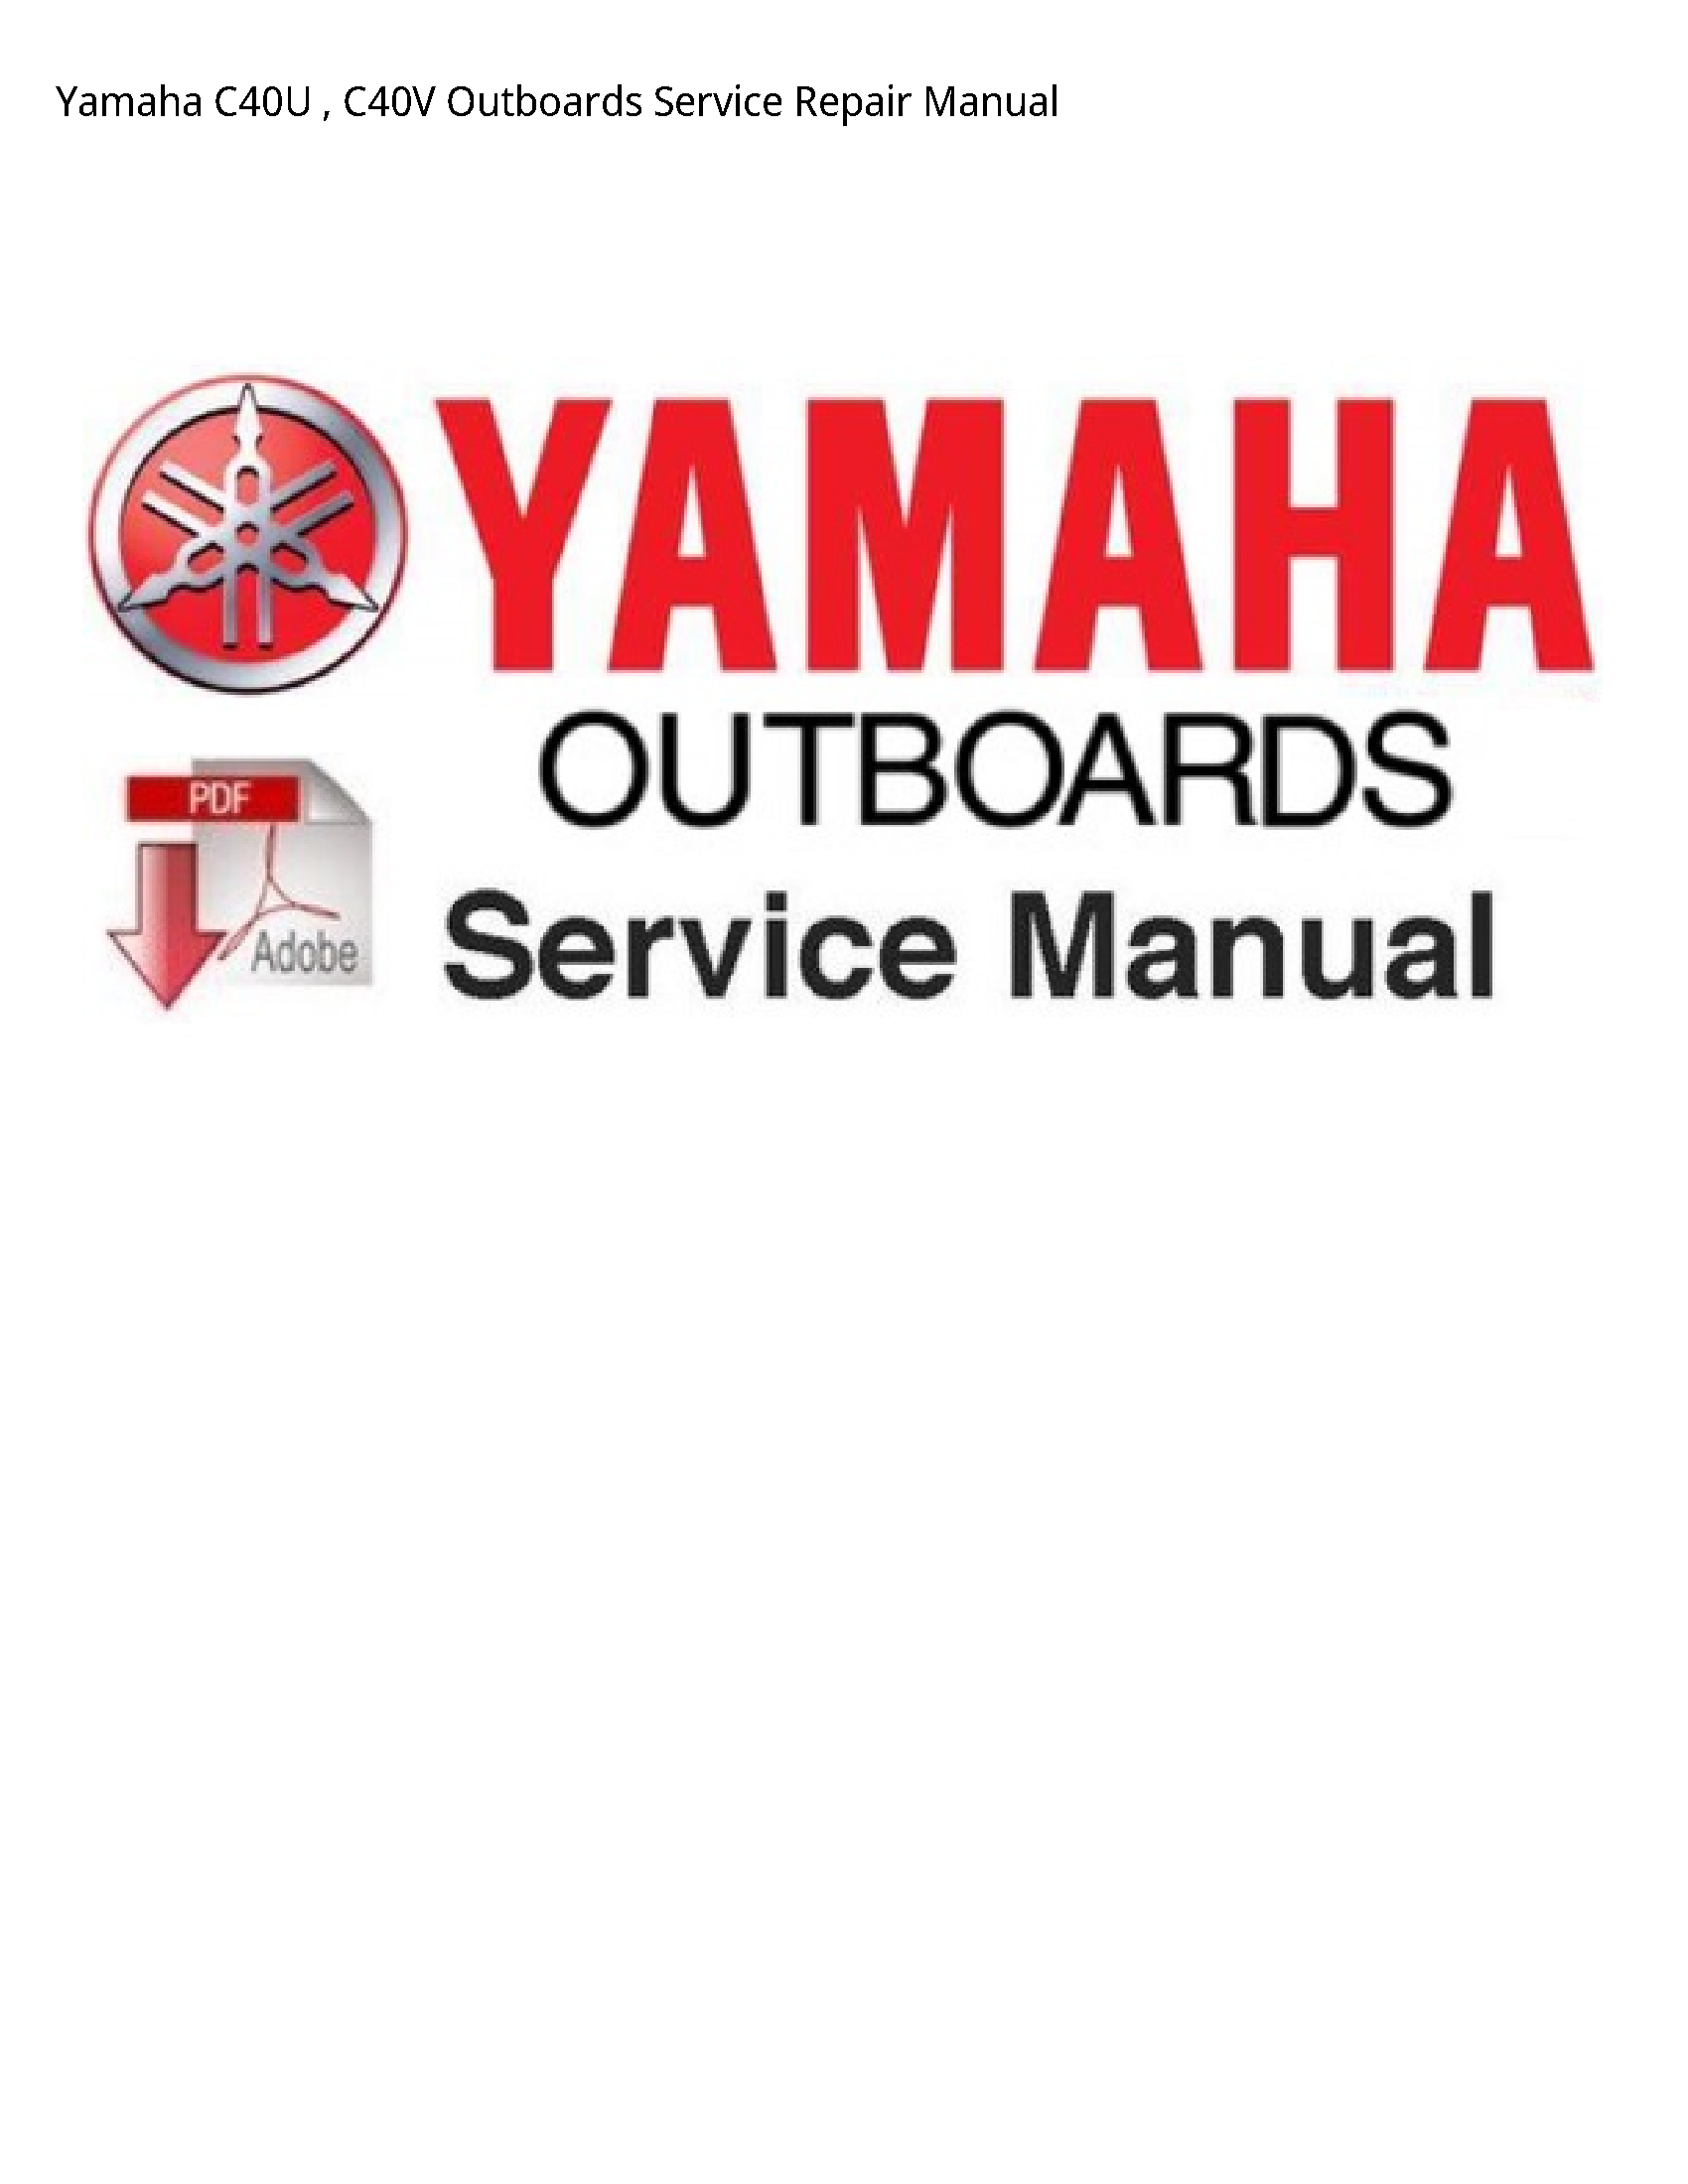 Yamaha C40U Outboards manual